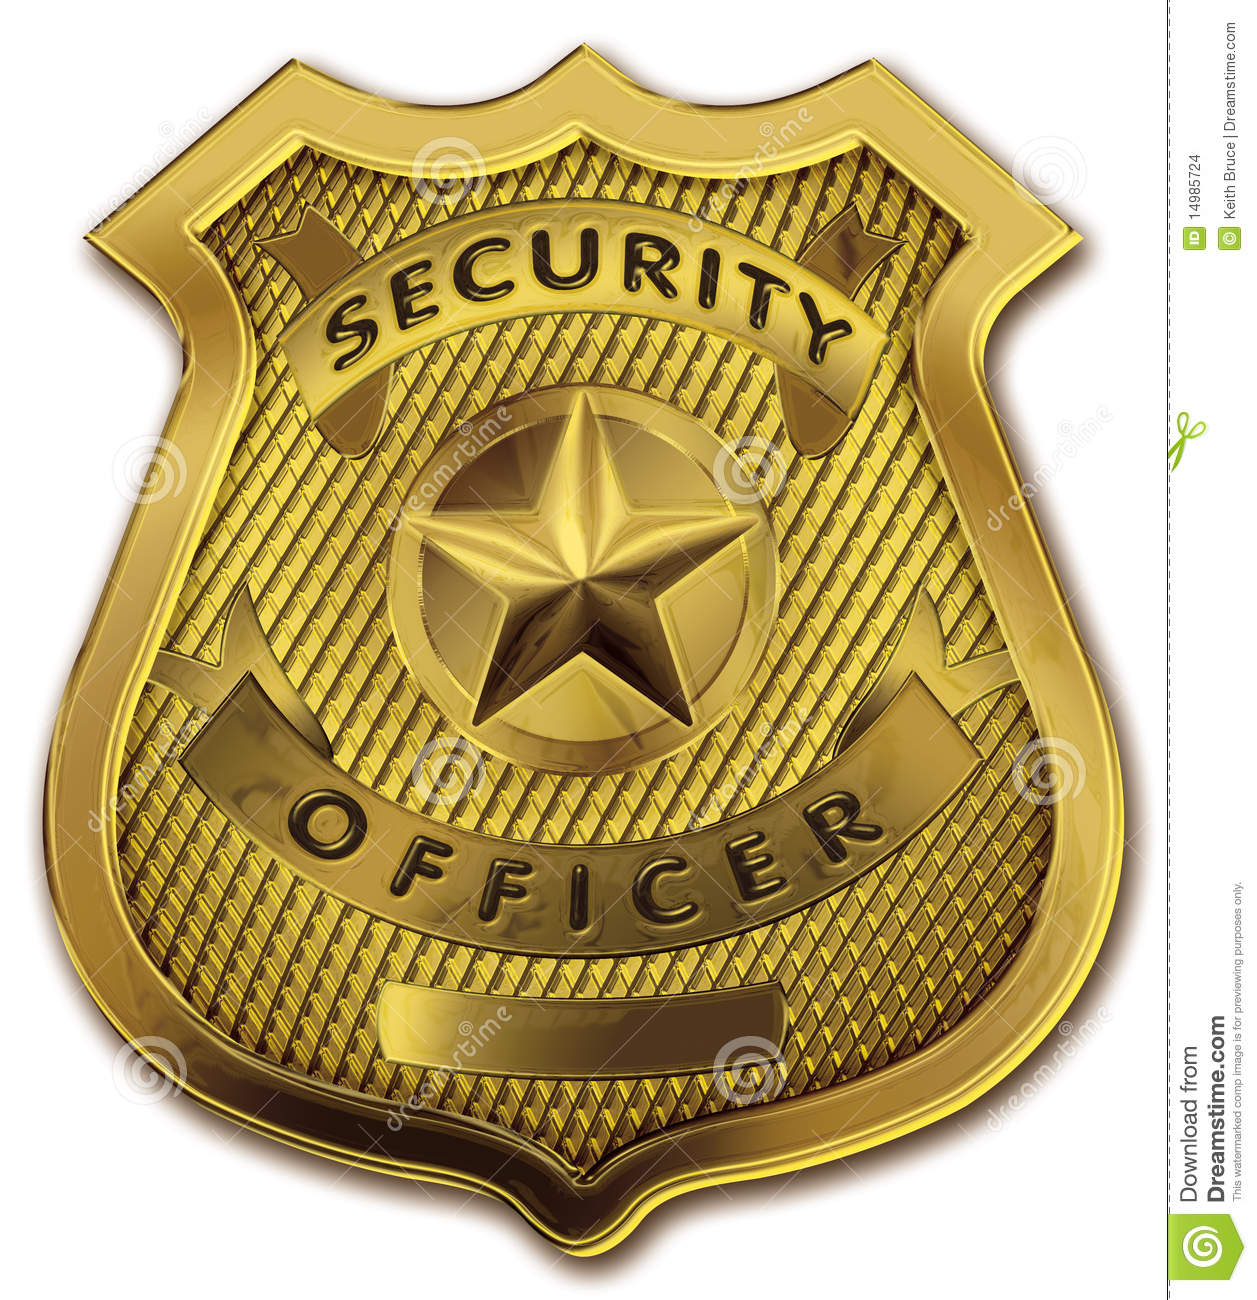 Security Officer Badge Clip Art